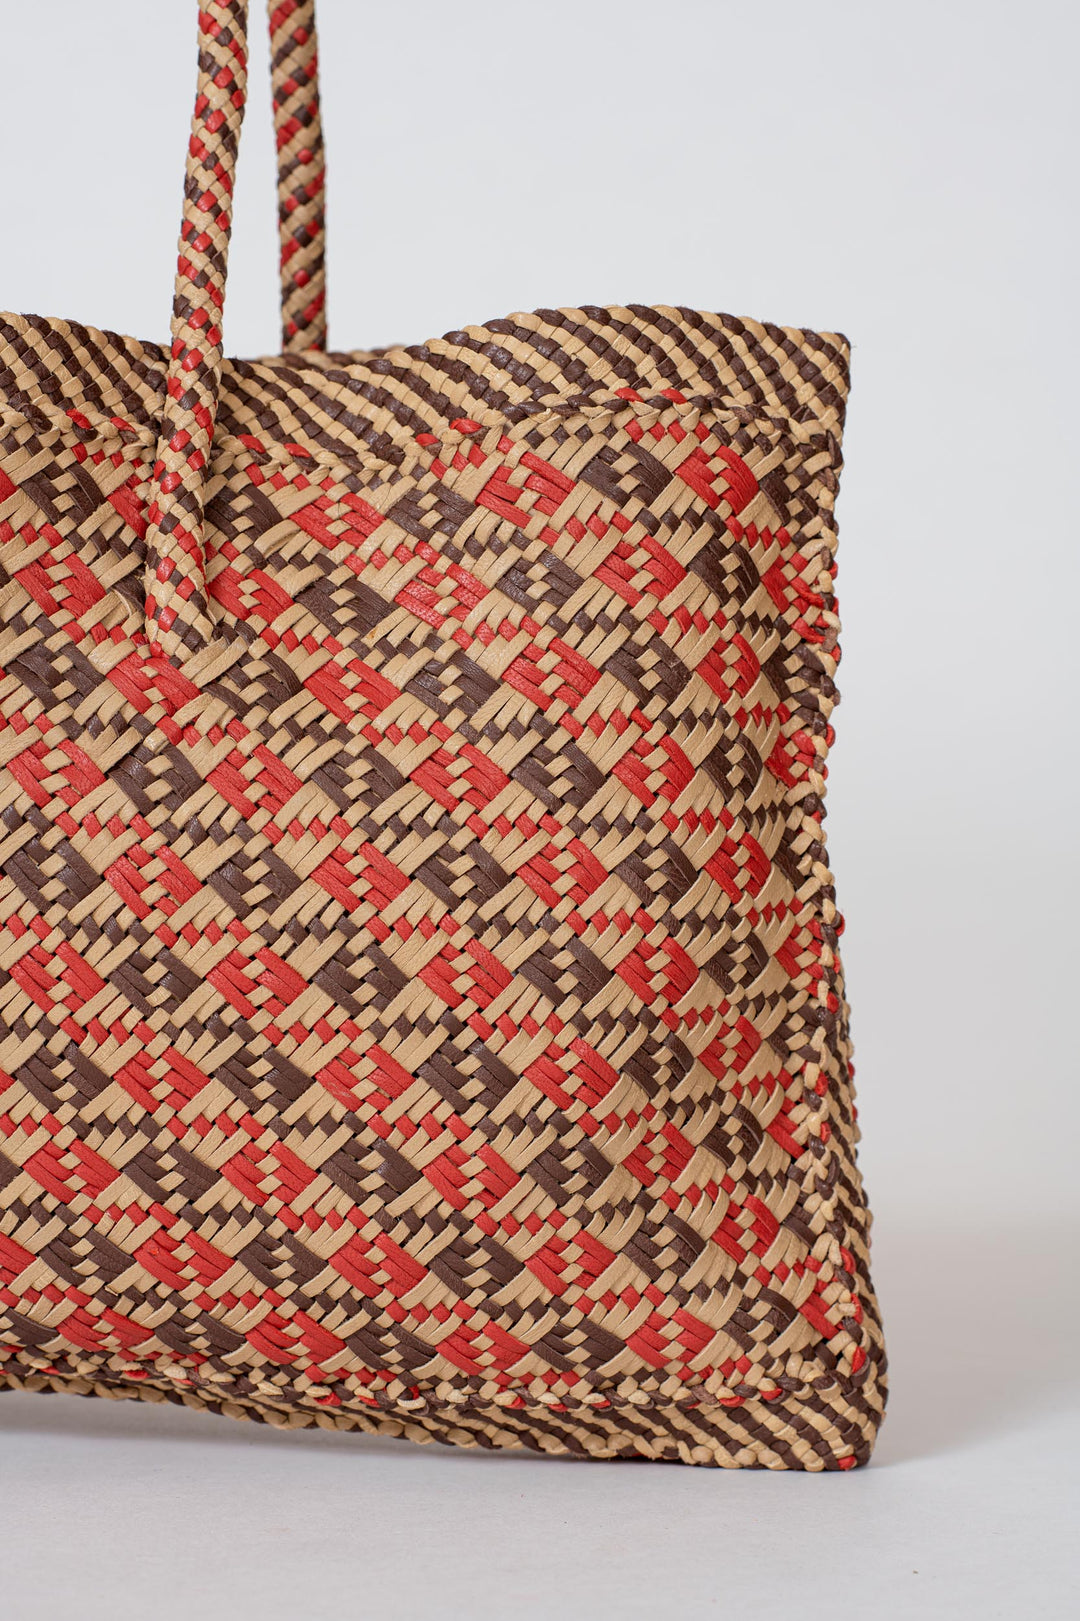 Dragon Diffusion woven leather bag handmade - Maori Kete Red